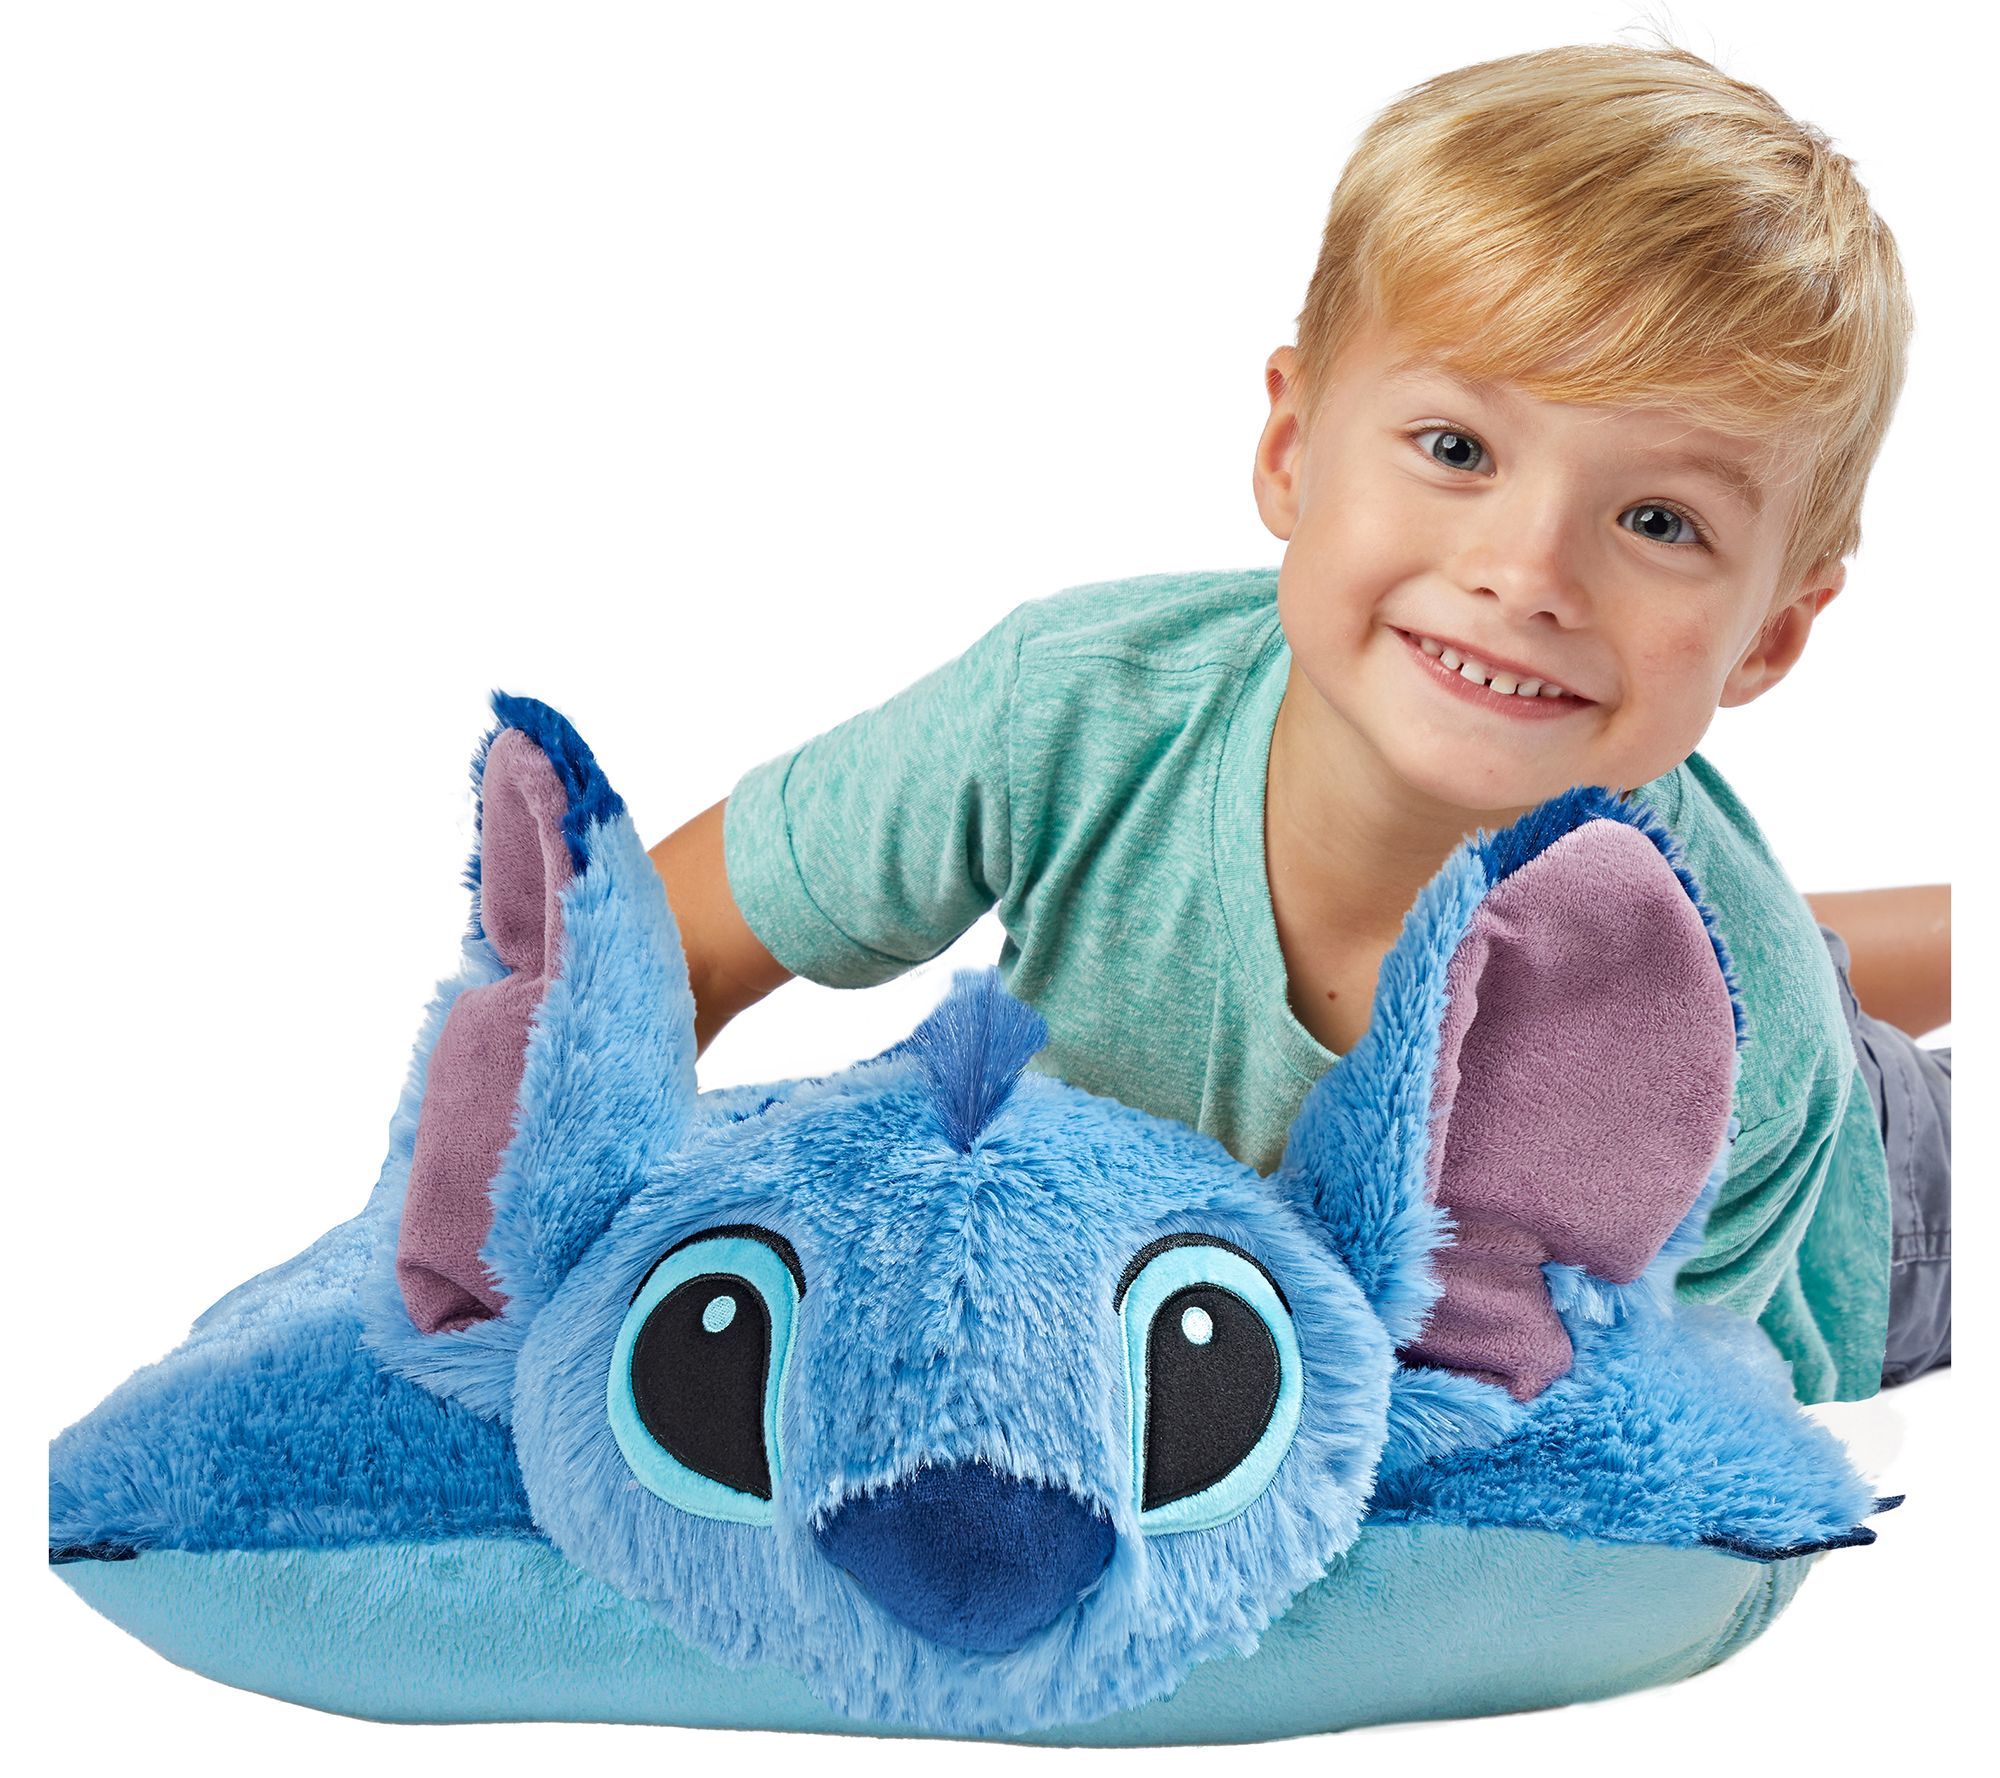 Disney Stitch Plush Pillow Plush Toy Pet Doll New Lilo & Stitch